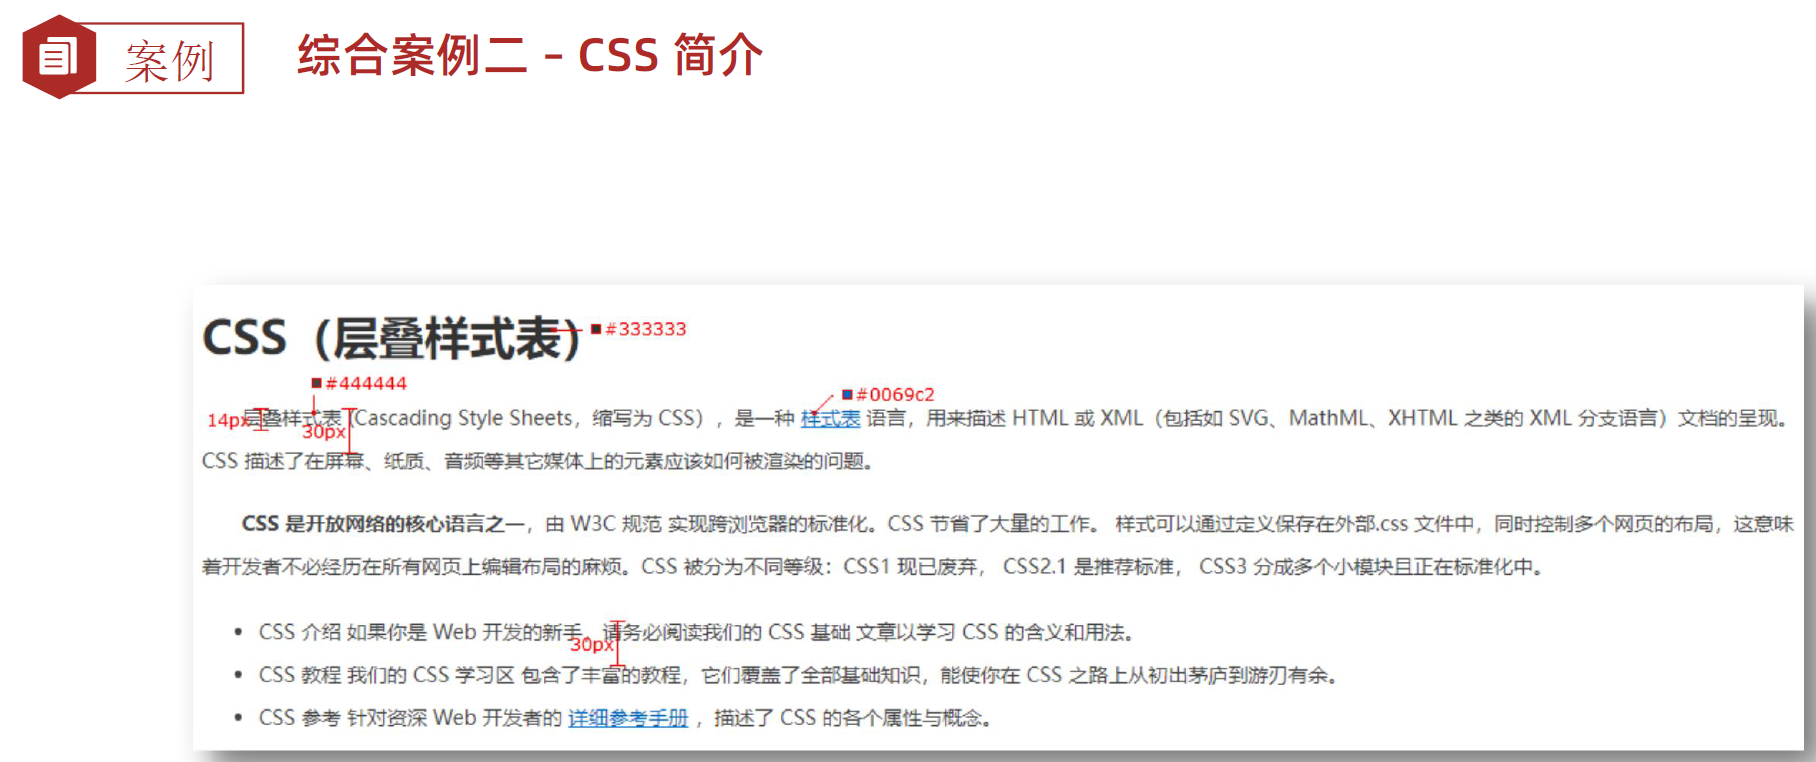 前端Web开发HTML5+CSS3+移动web视频教程 Day3 CSS 第1天